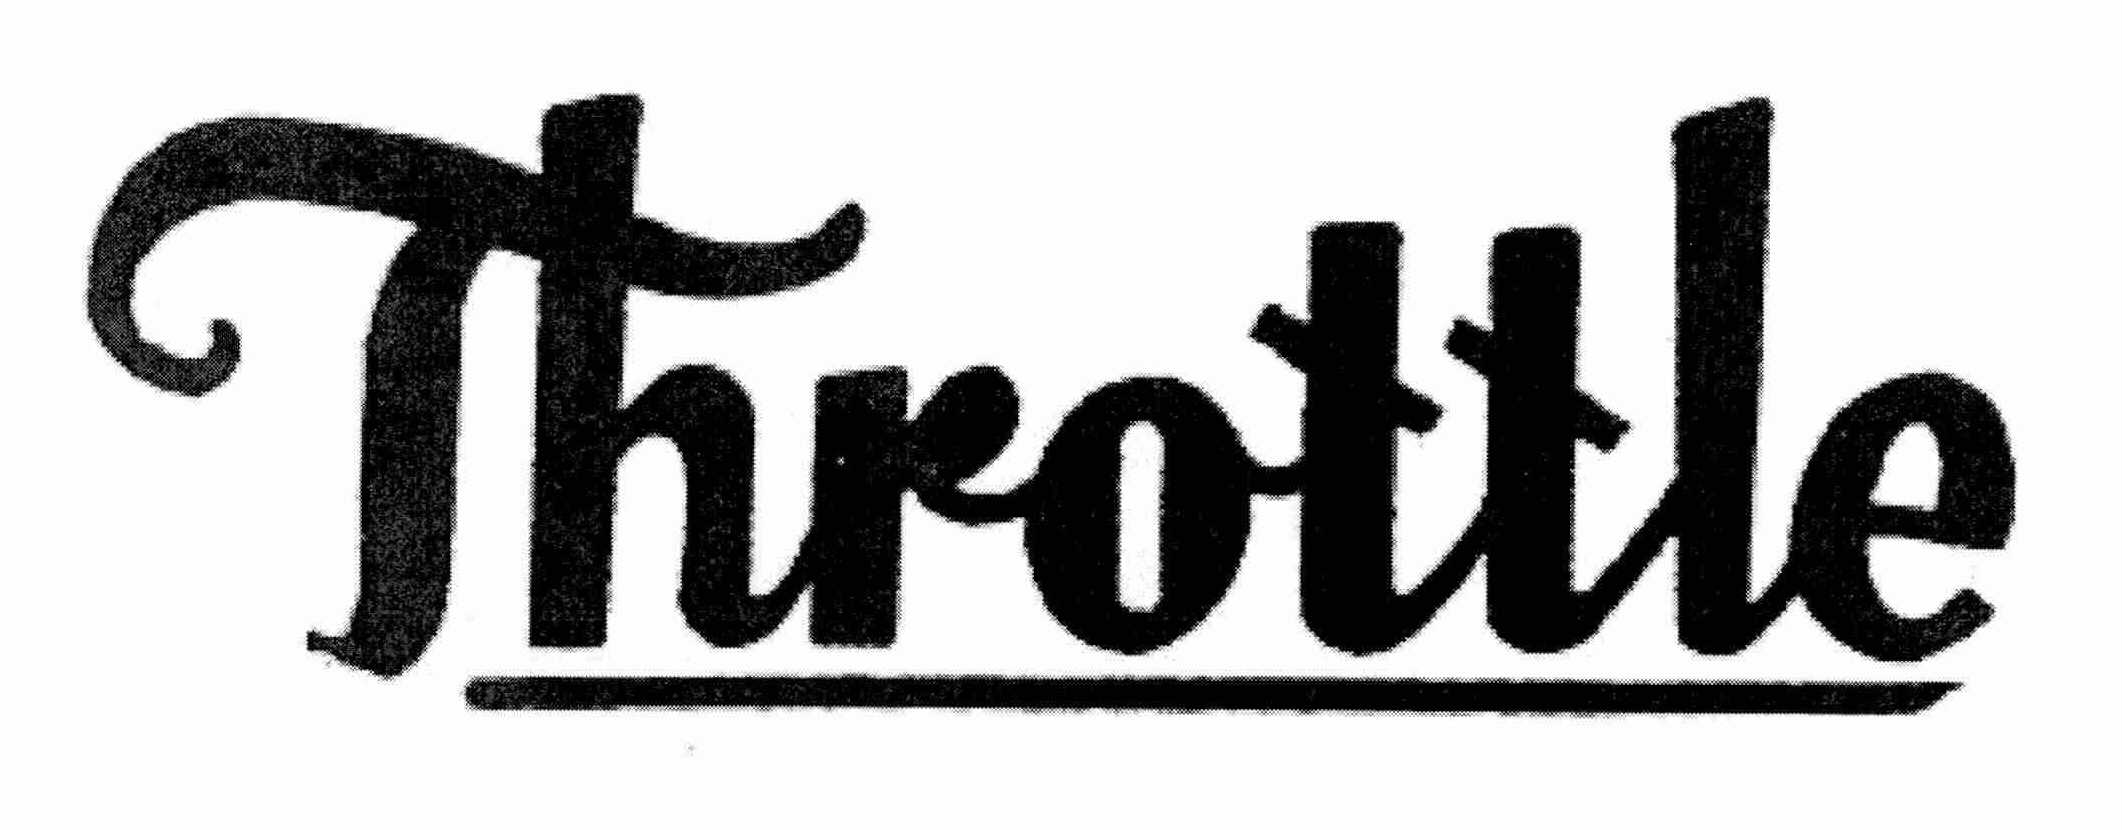 Trademark Logo THROTTLE